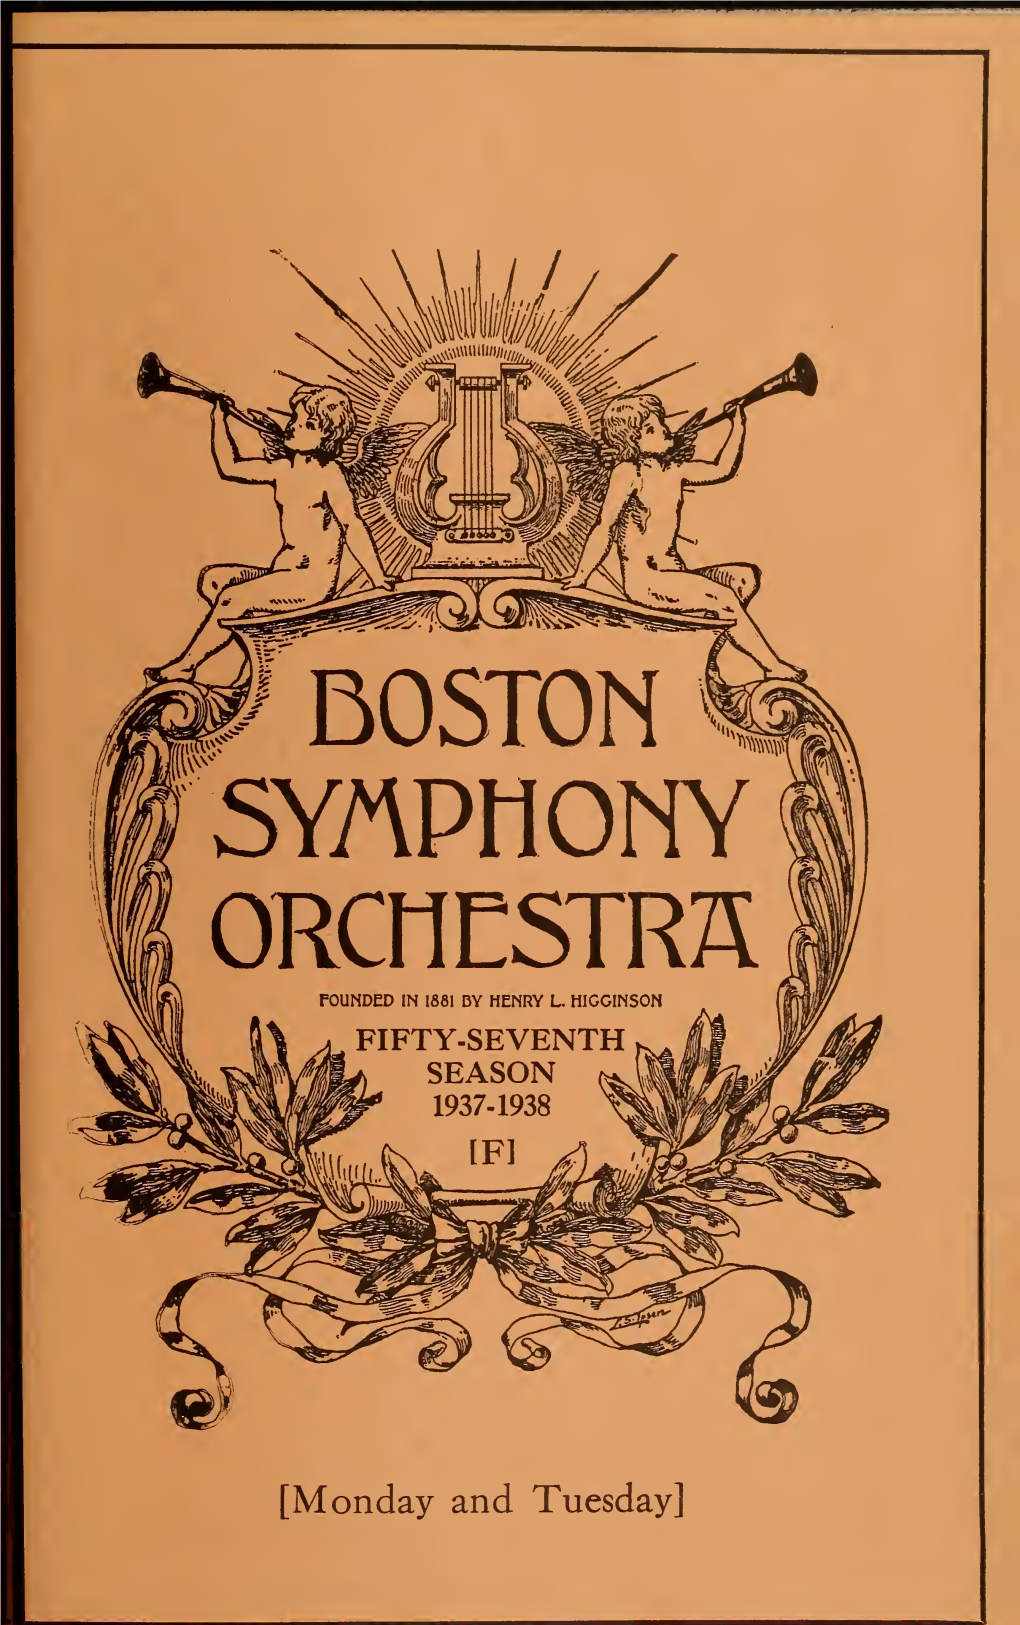 Boston Symphony Orchestra Concert Programs, Season 57,1937-1938